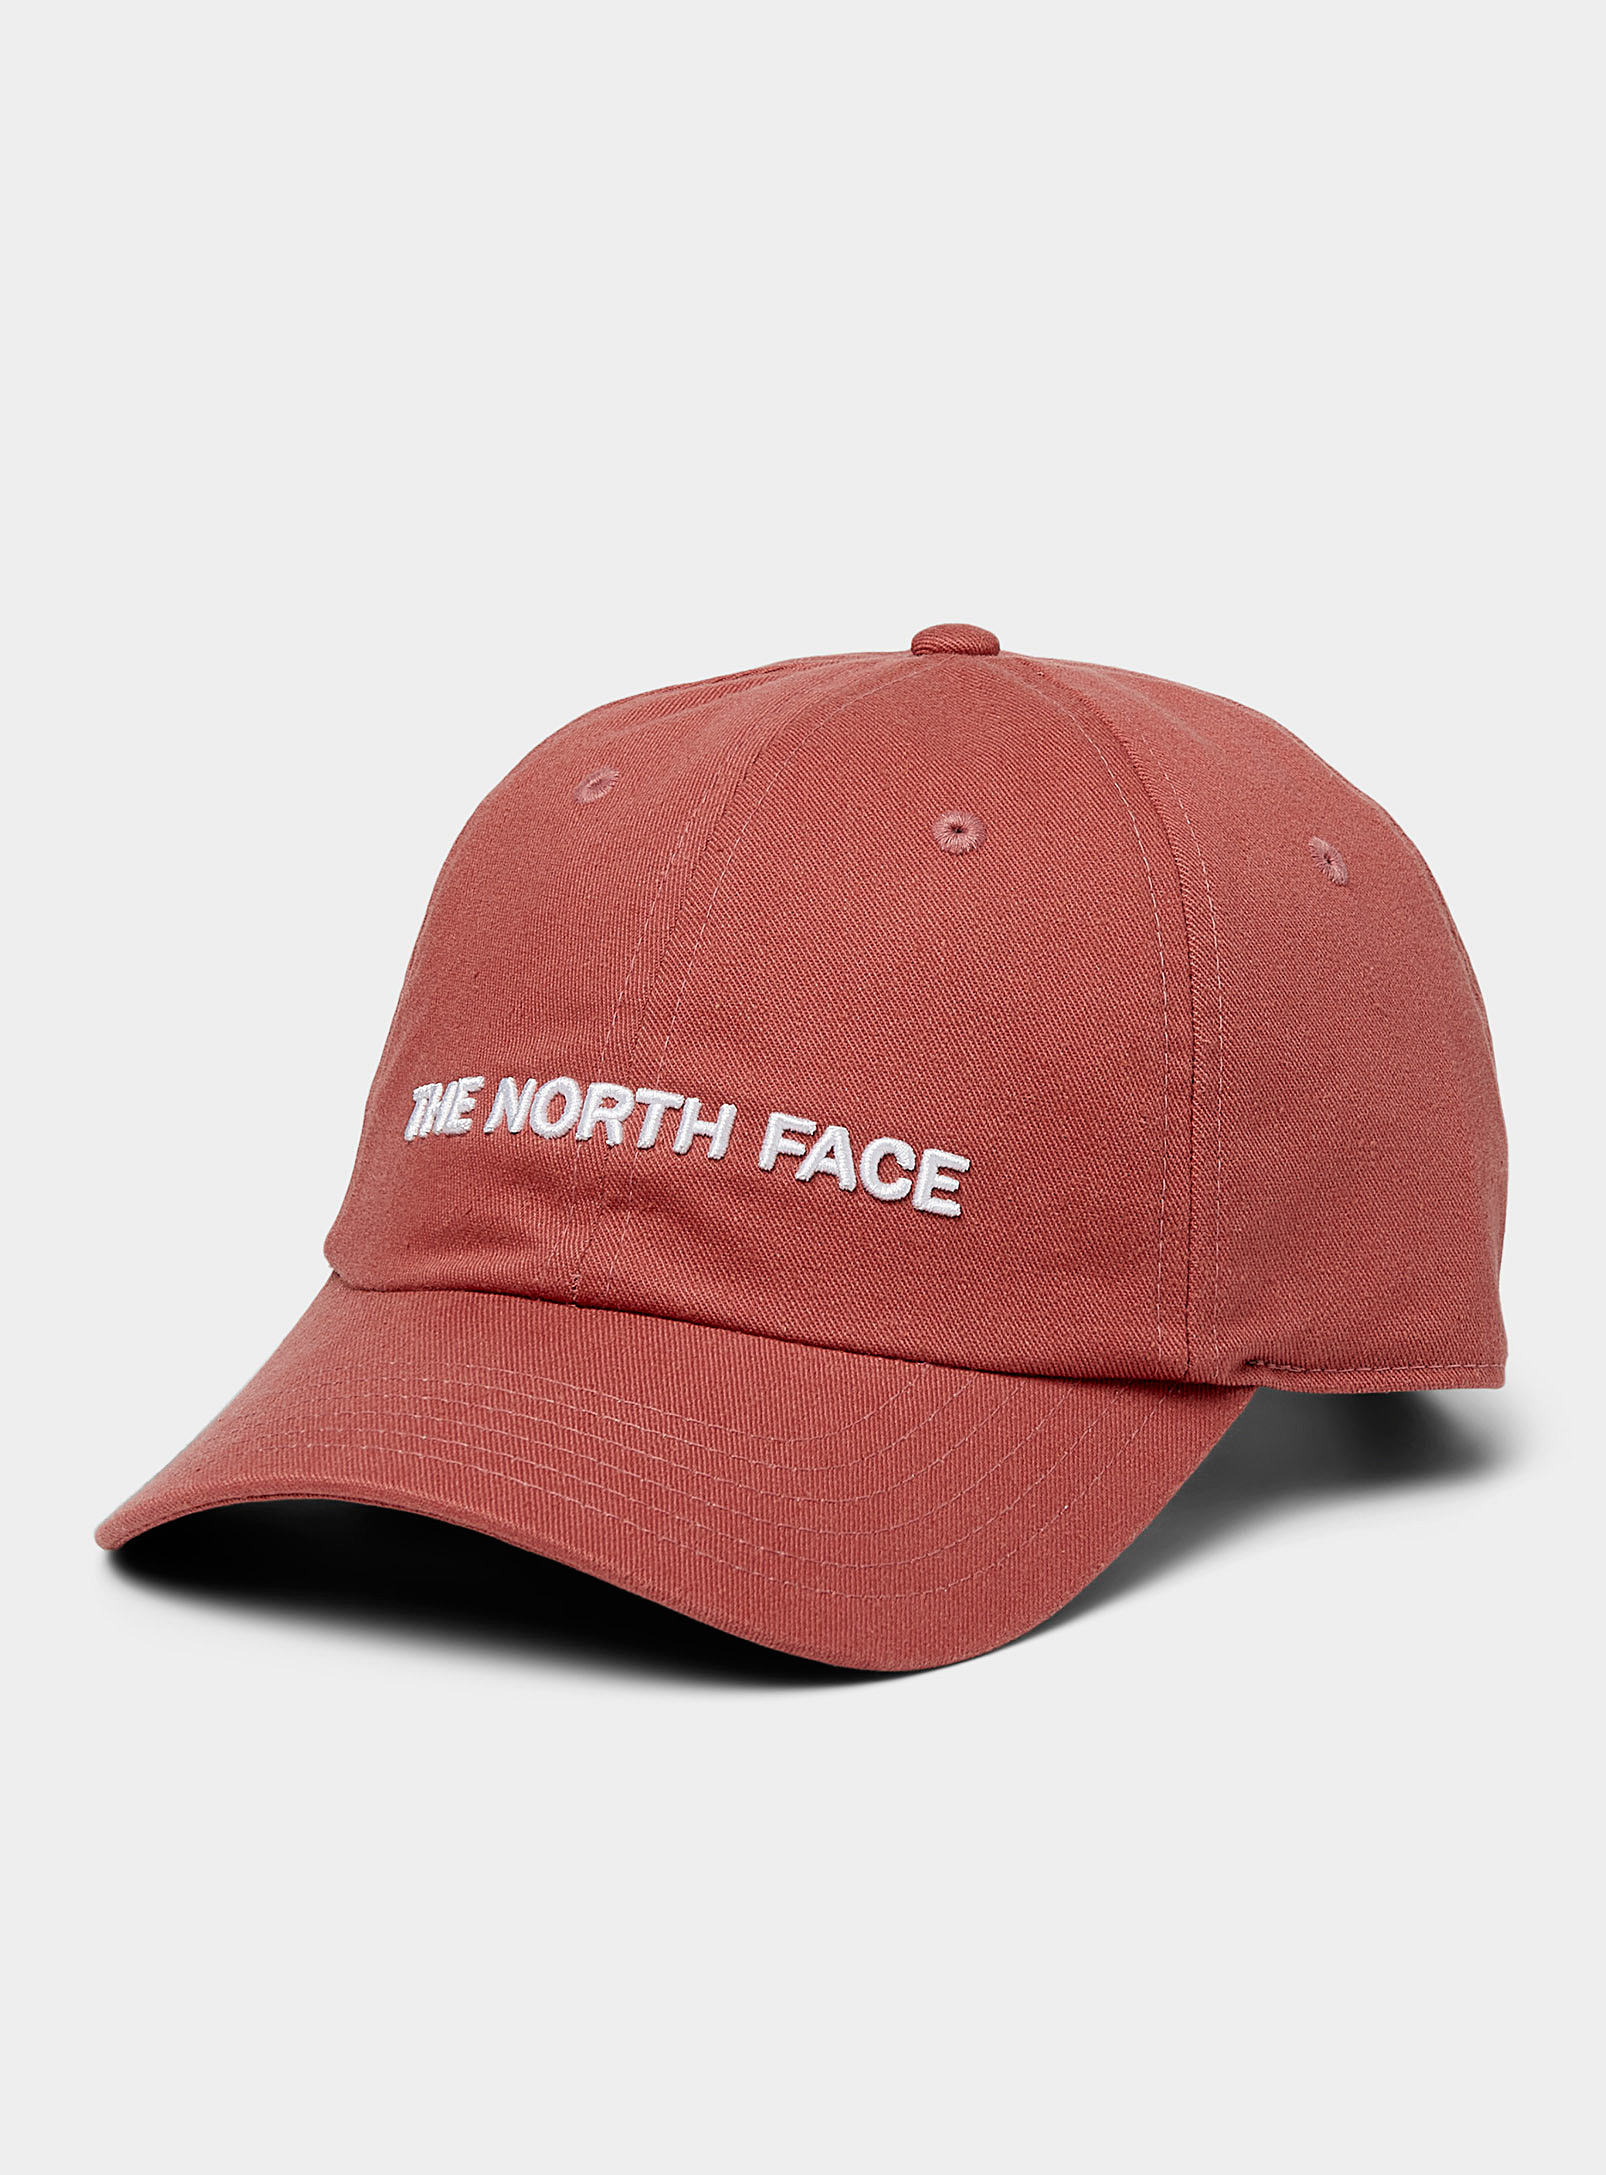 The North Face Minimalist Baseball Logo Cap In Brown